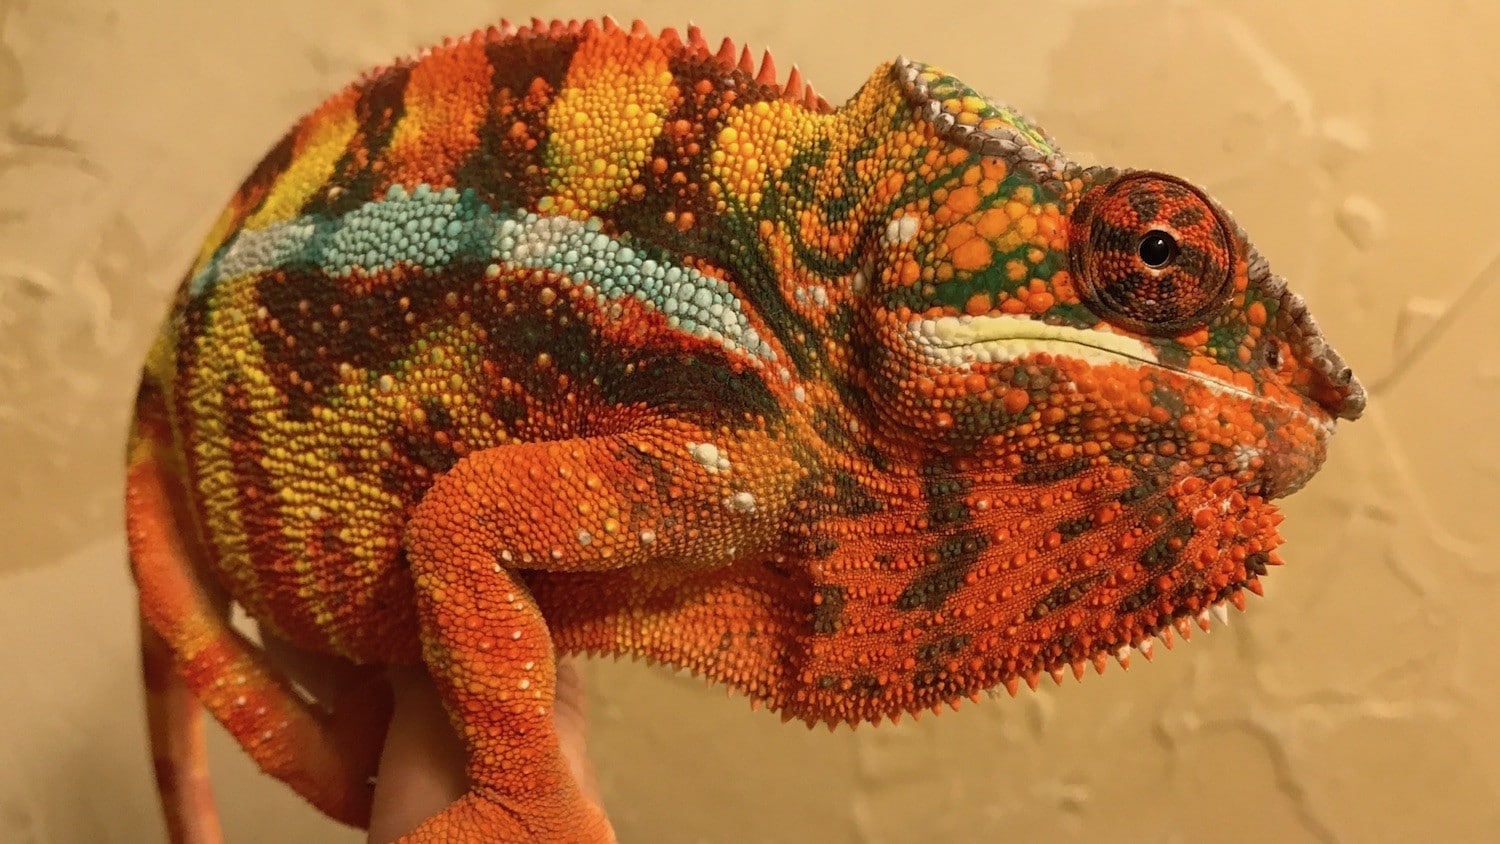 Sambava panther chameleon for sale